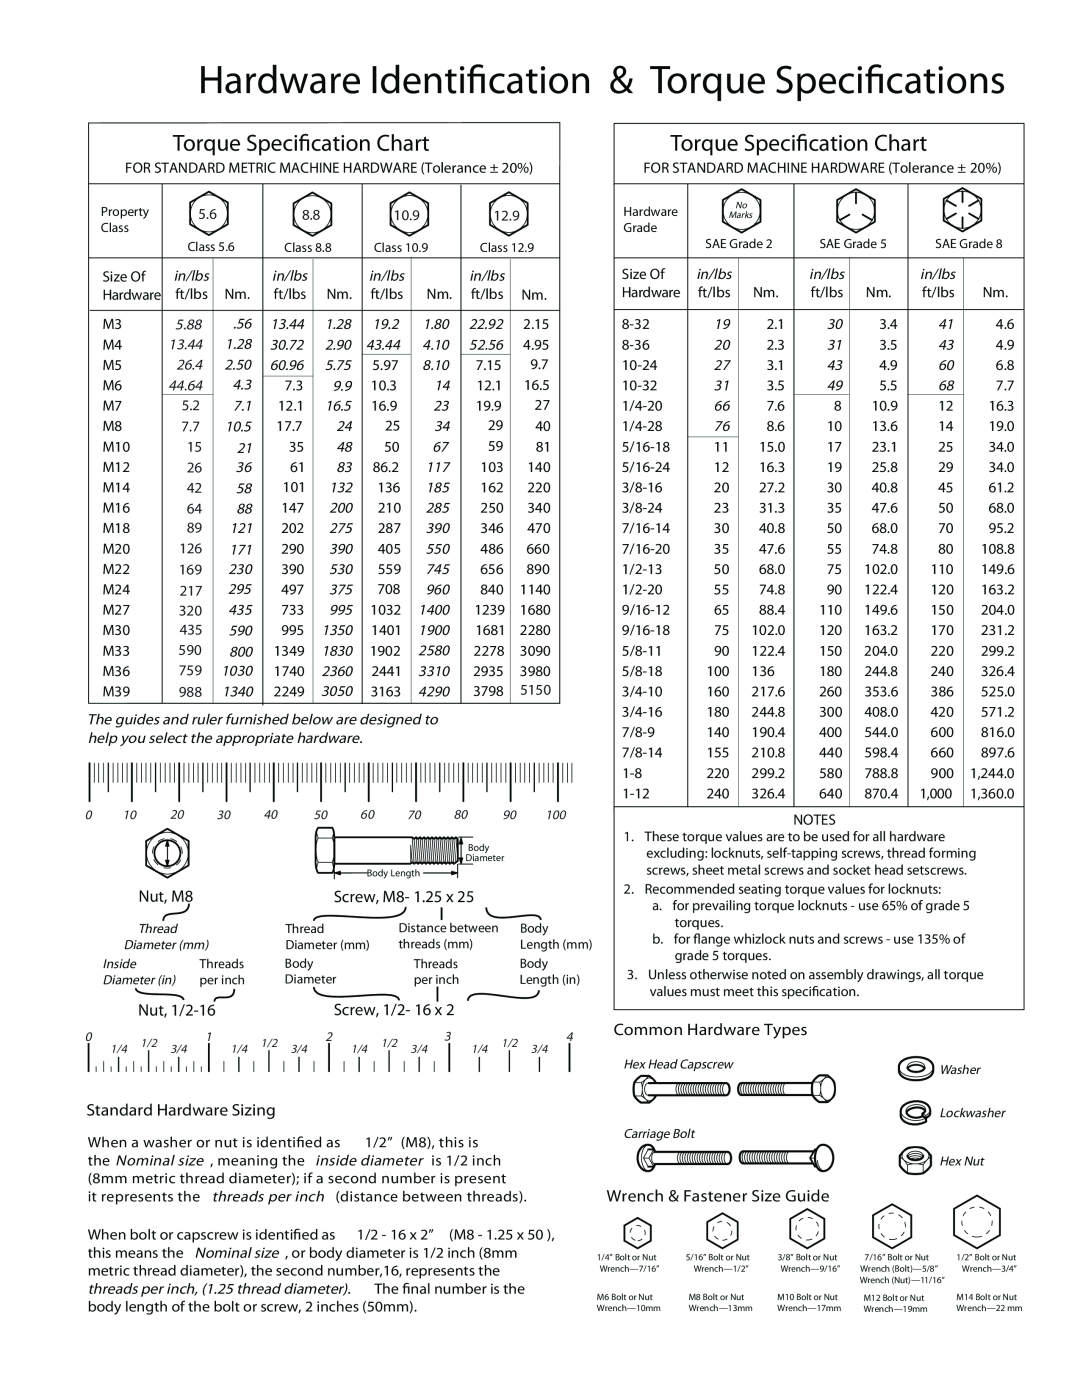 Husqvarna 020524-00 3 Torque Specication Chart, NotScrew, Common Hardware Types, Standard Hardware Sizing, Nut, 1/2-16 